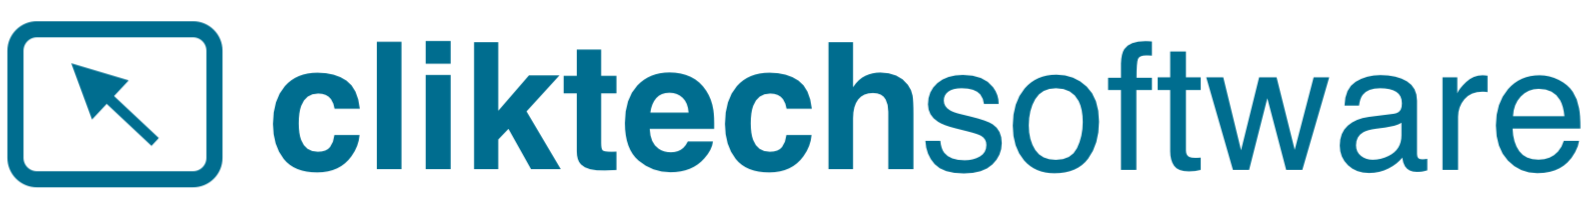 cc blue logo